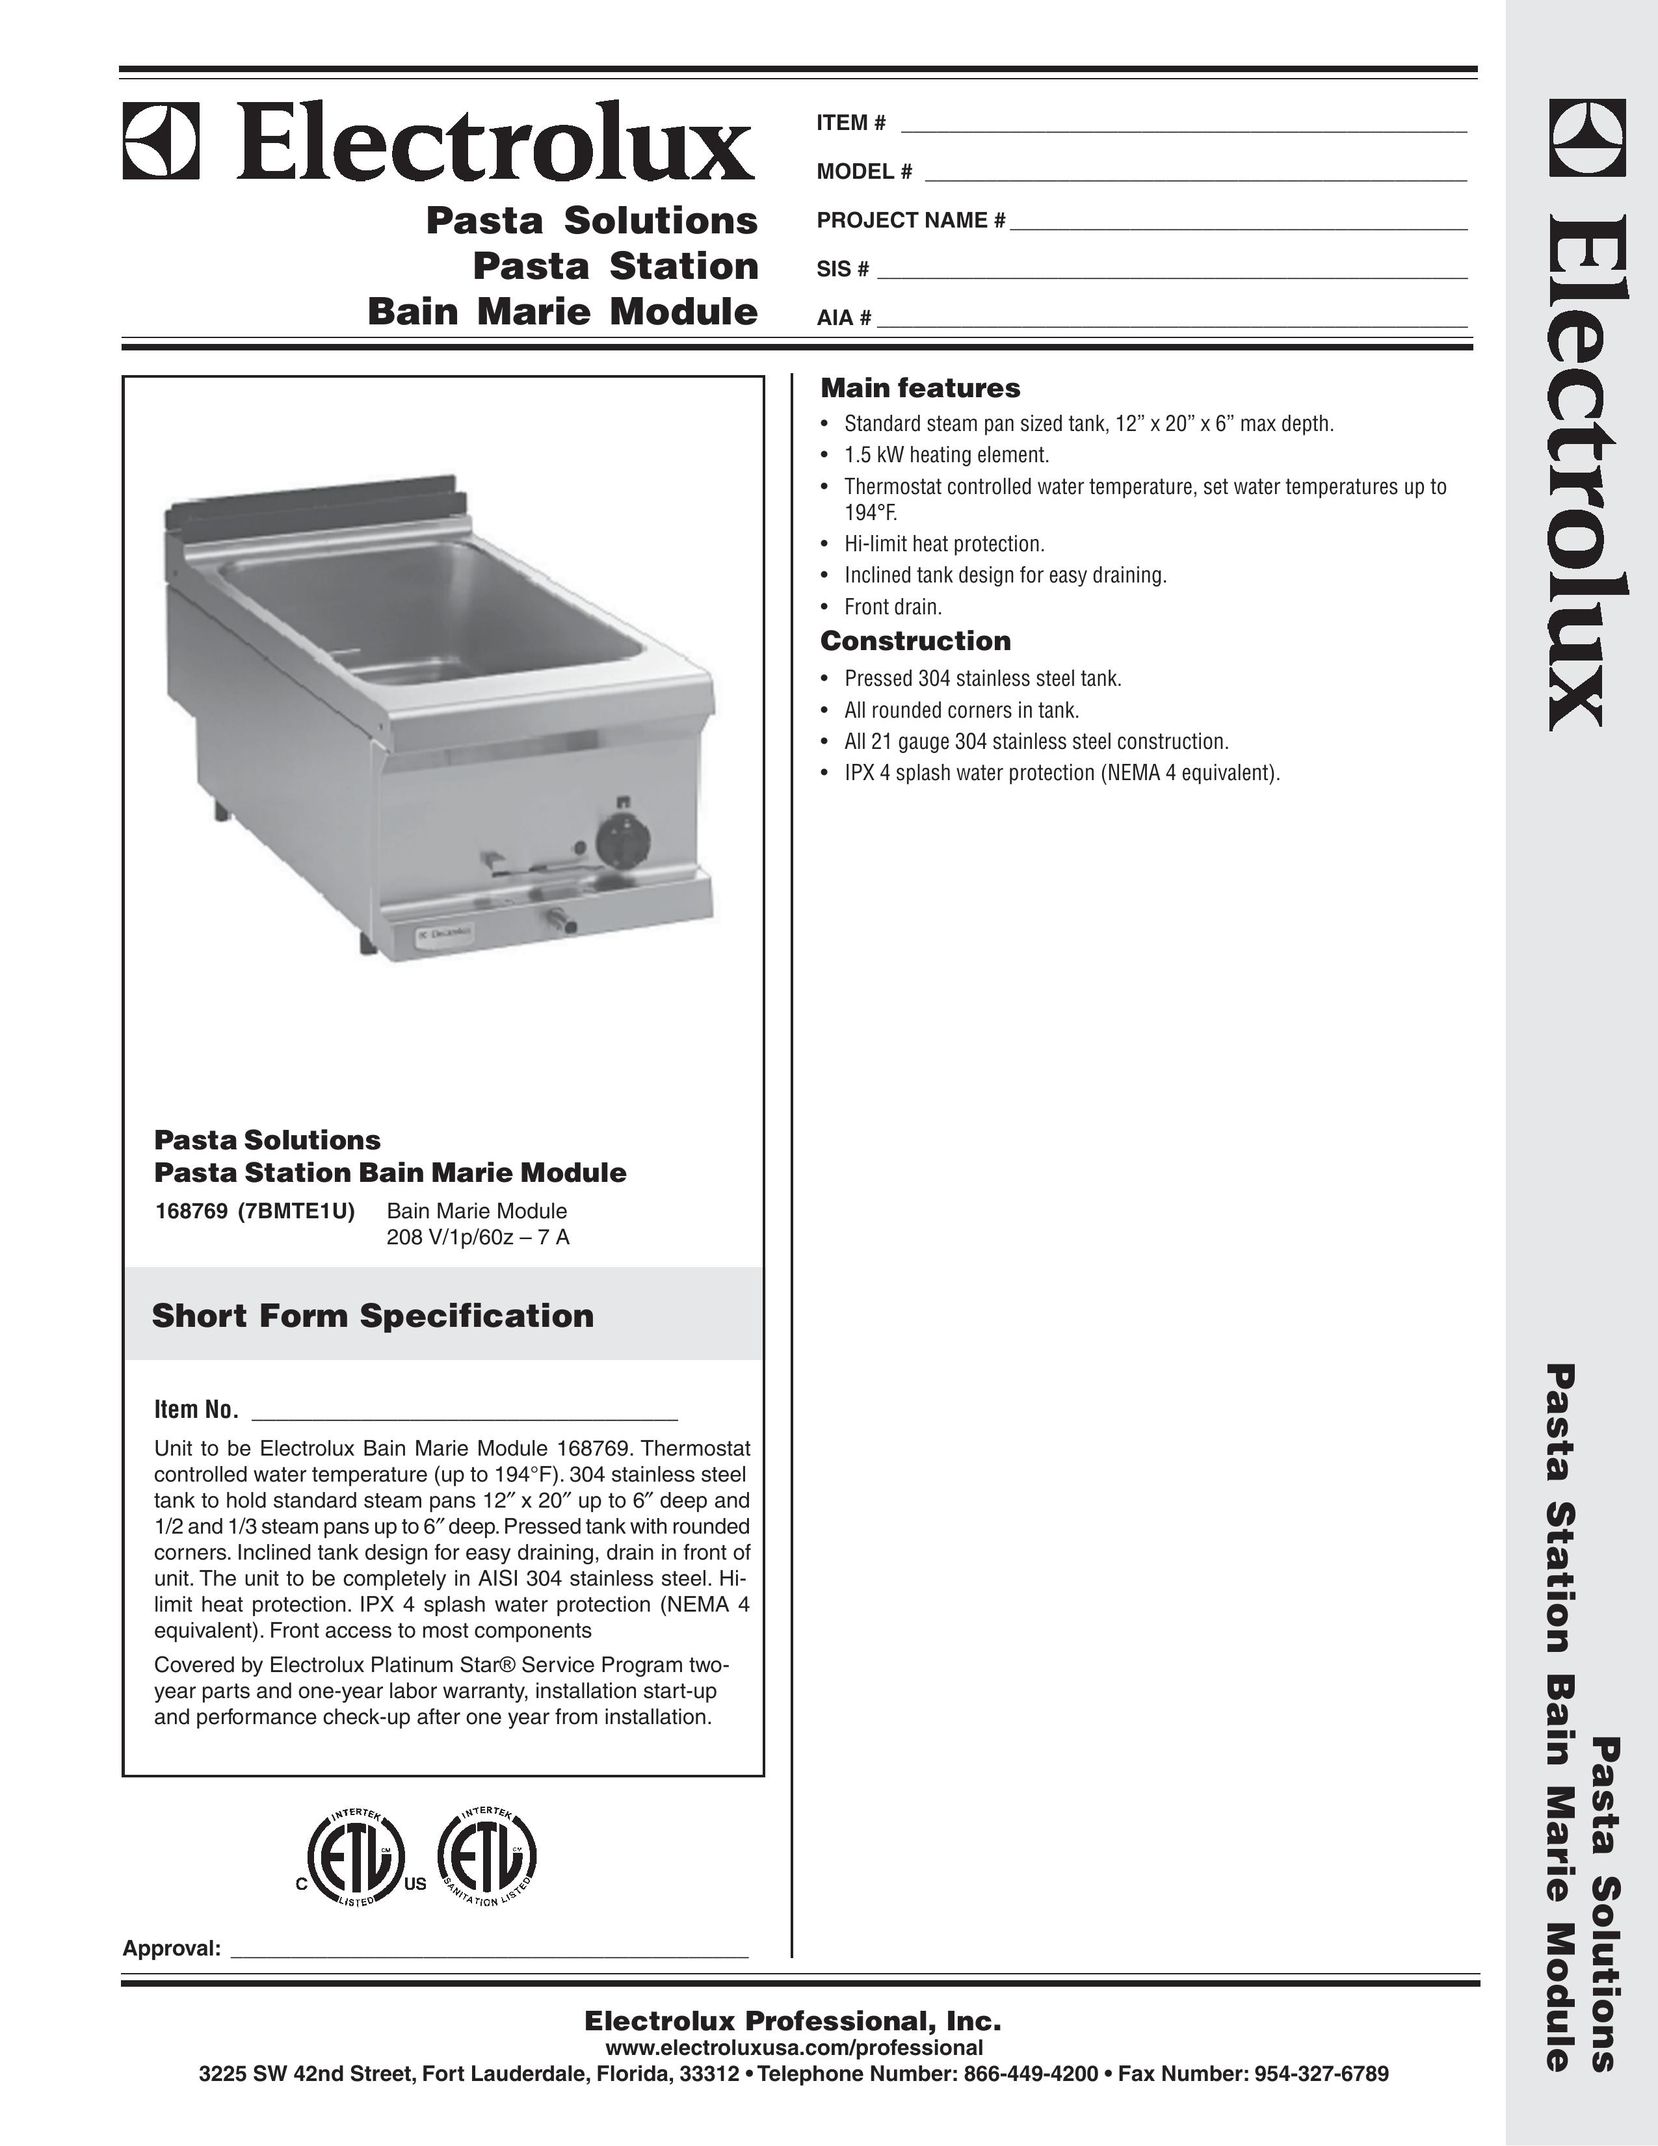 Electrolux 168769 (7BMTE1U) Pasta Maker User Manual